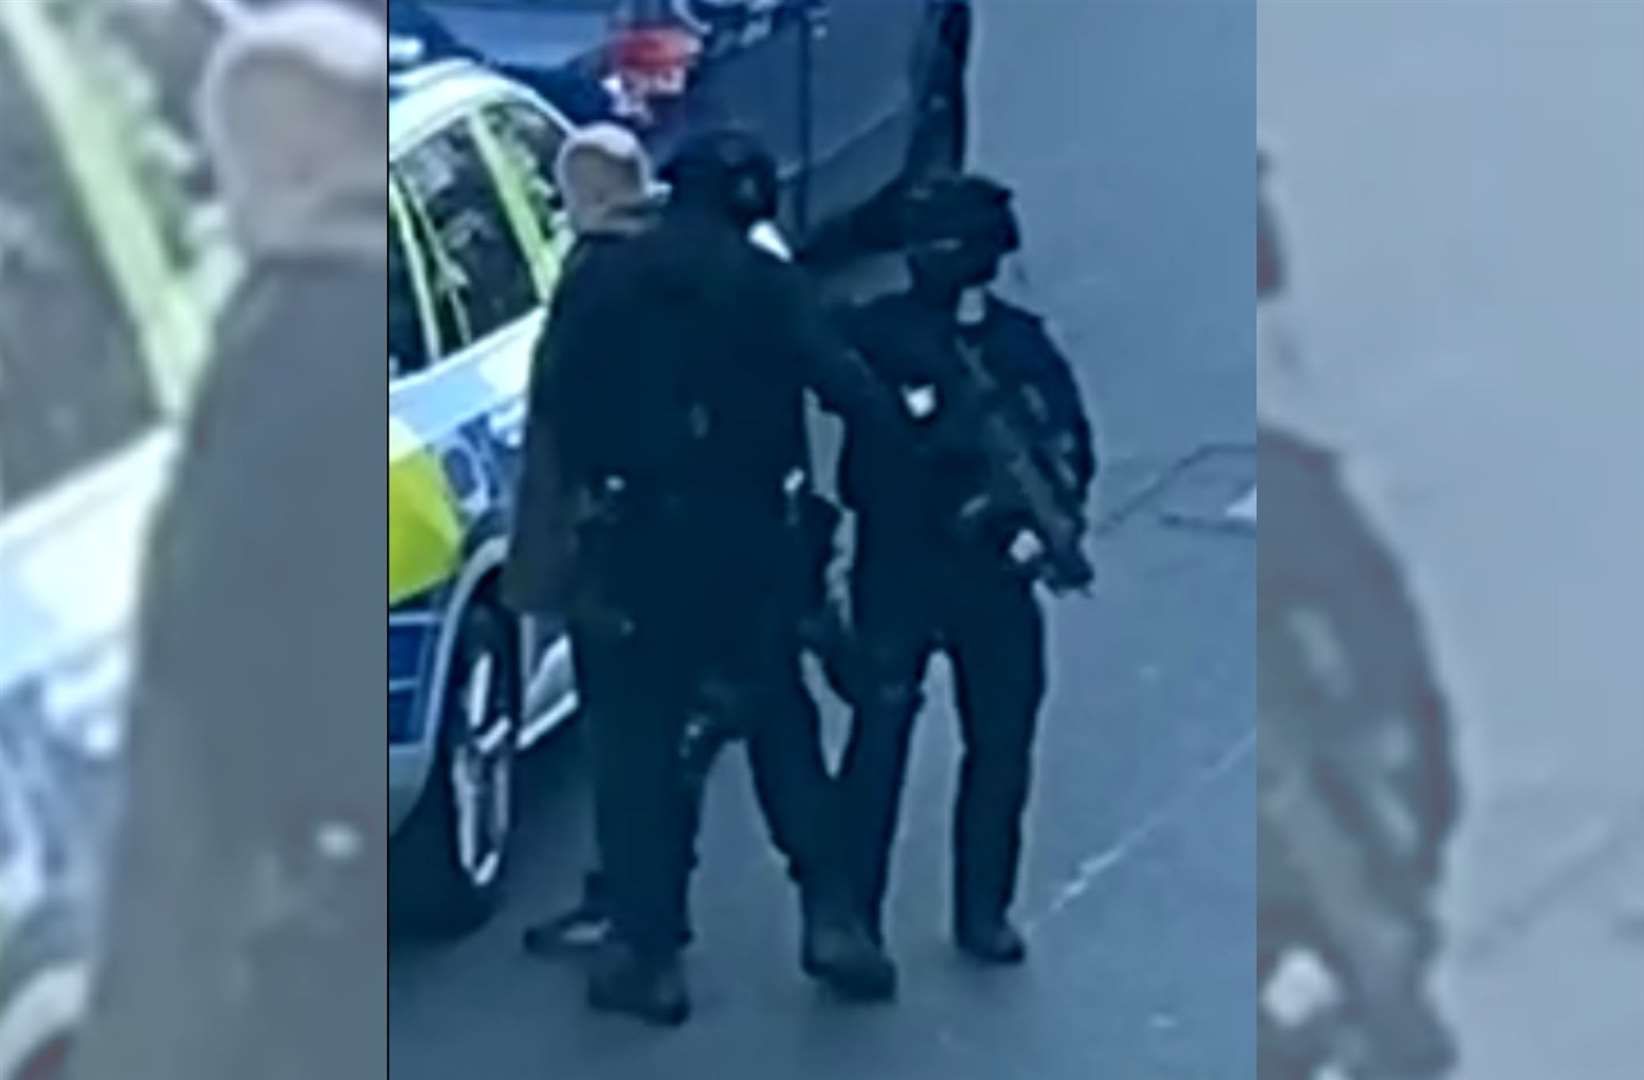 Armed police in Tontine Street, Folkestone, earlier today